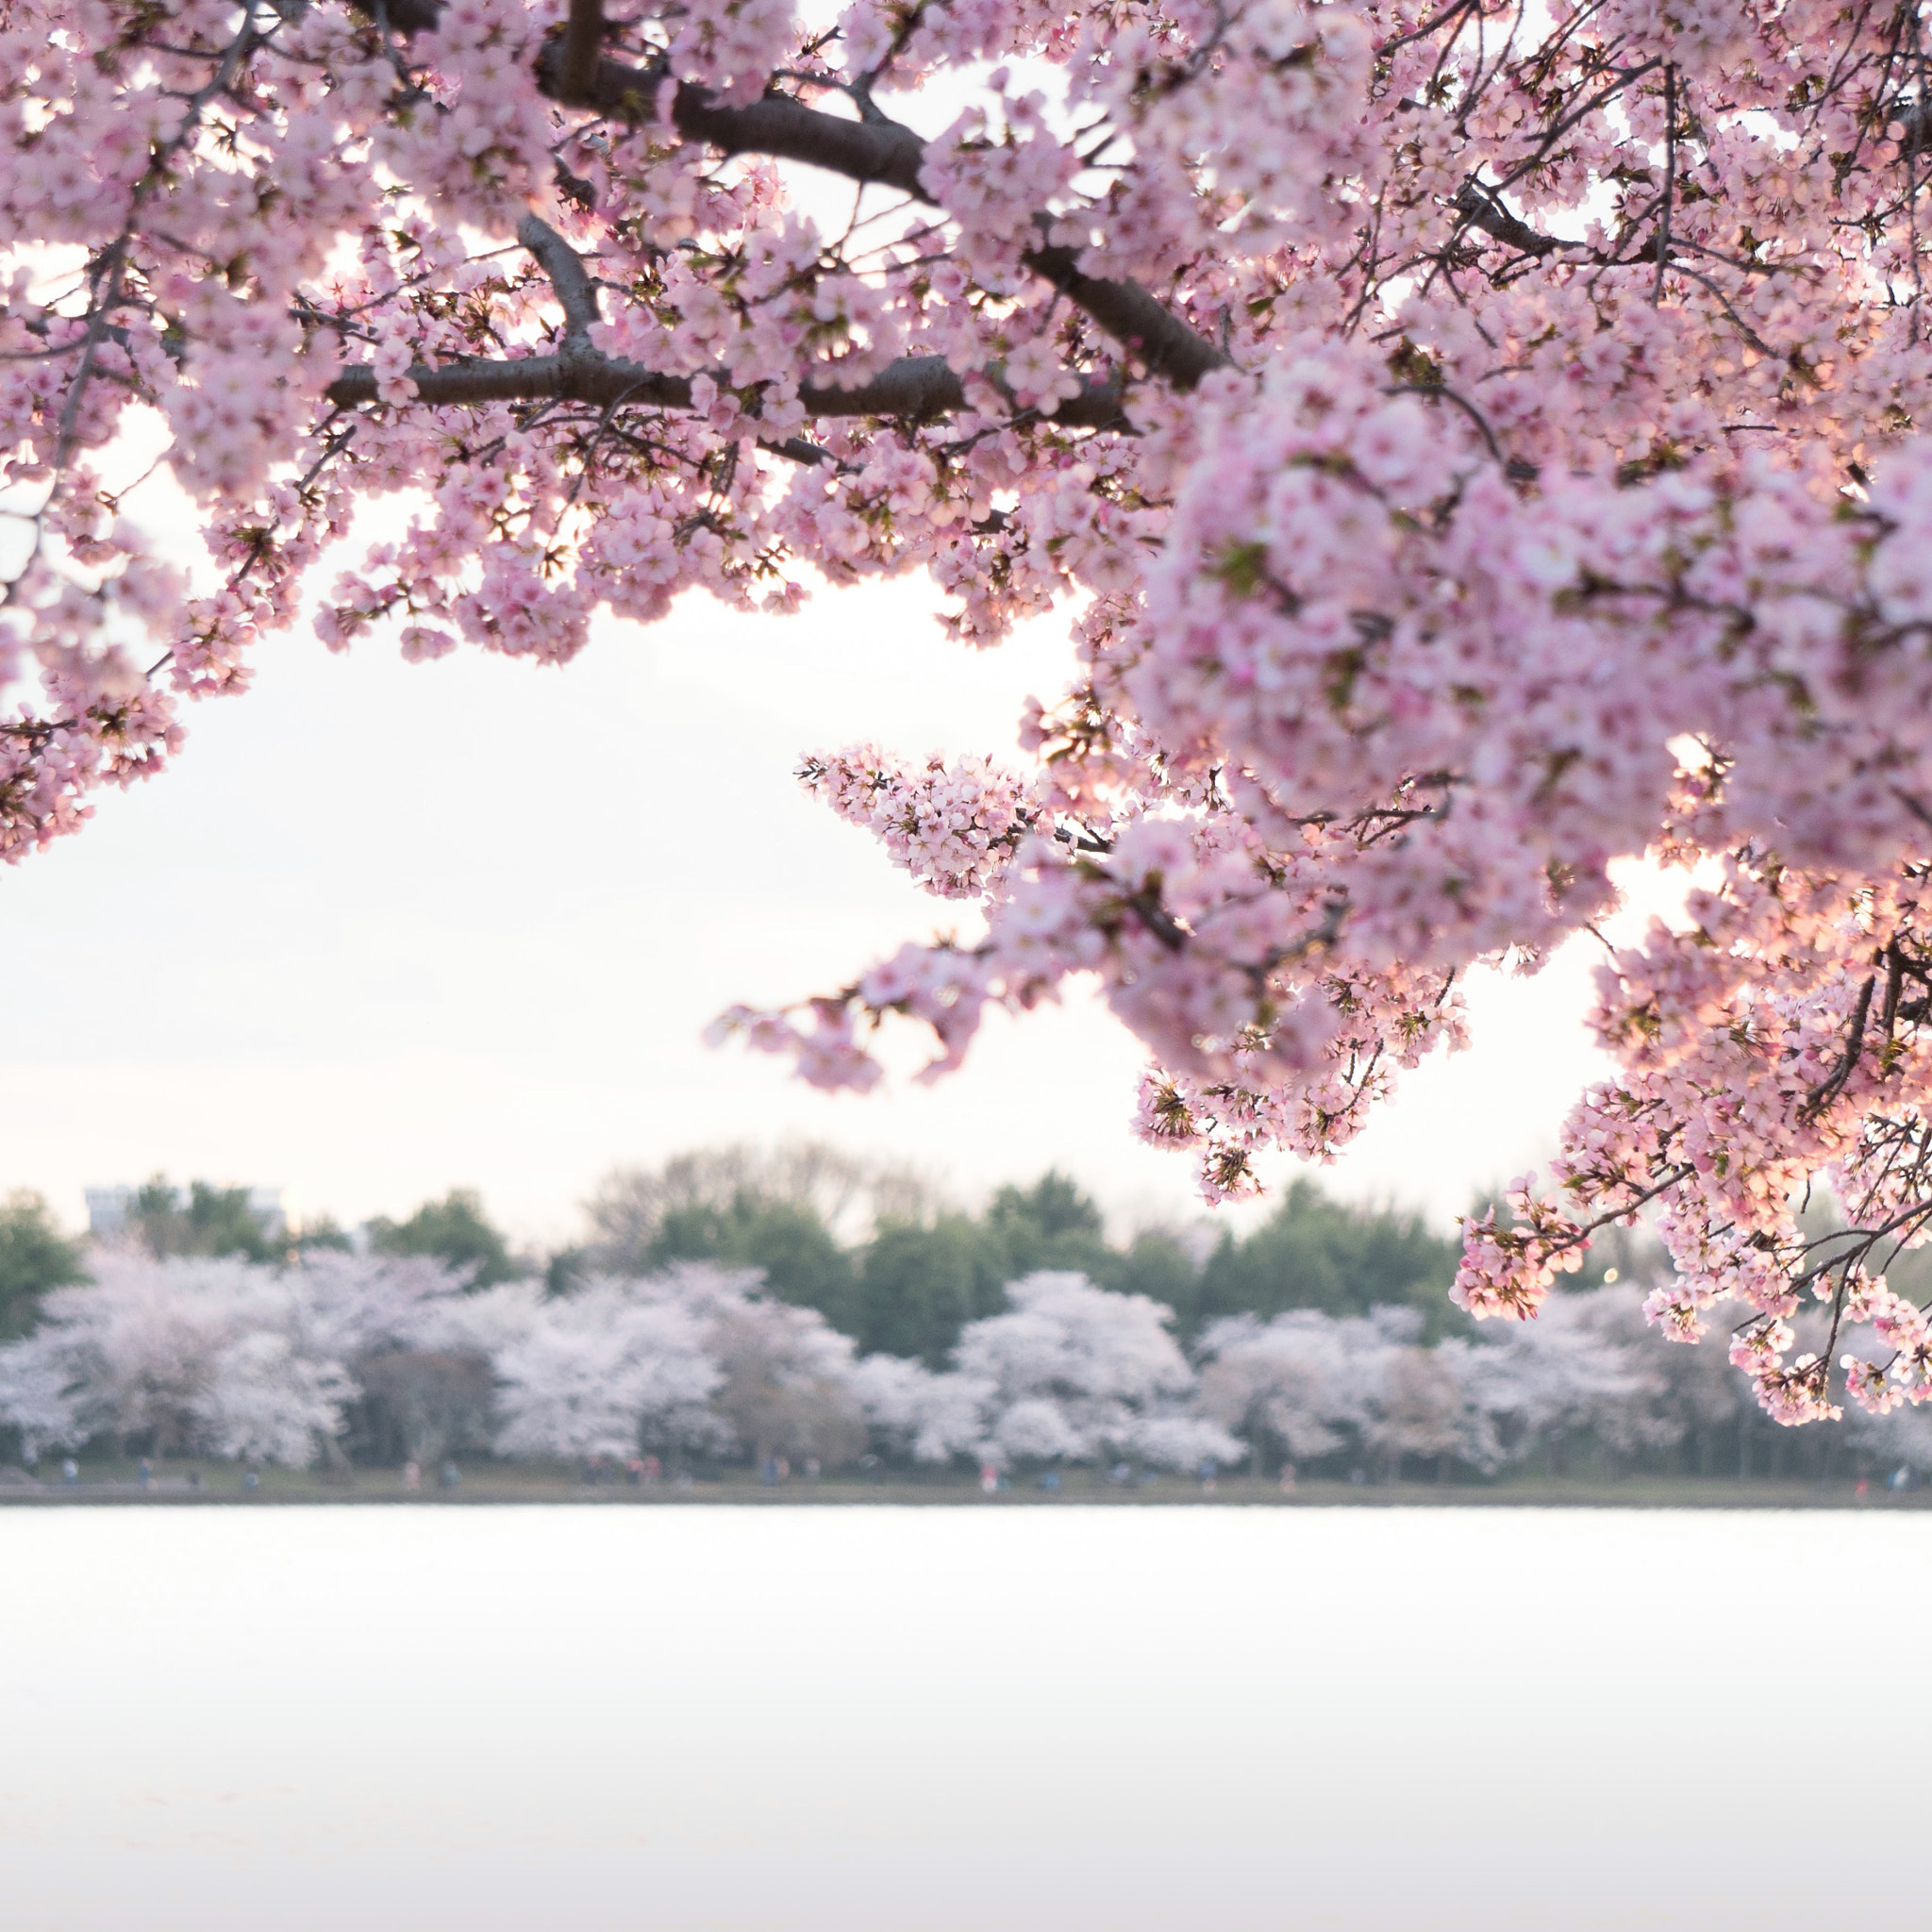 Sony a6300 sample photo. Cherry blossom festival 2017 photography